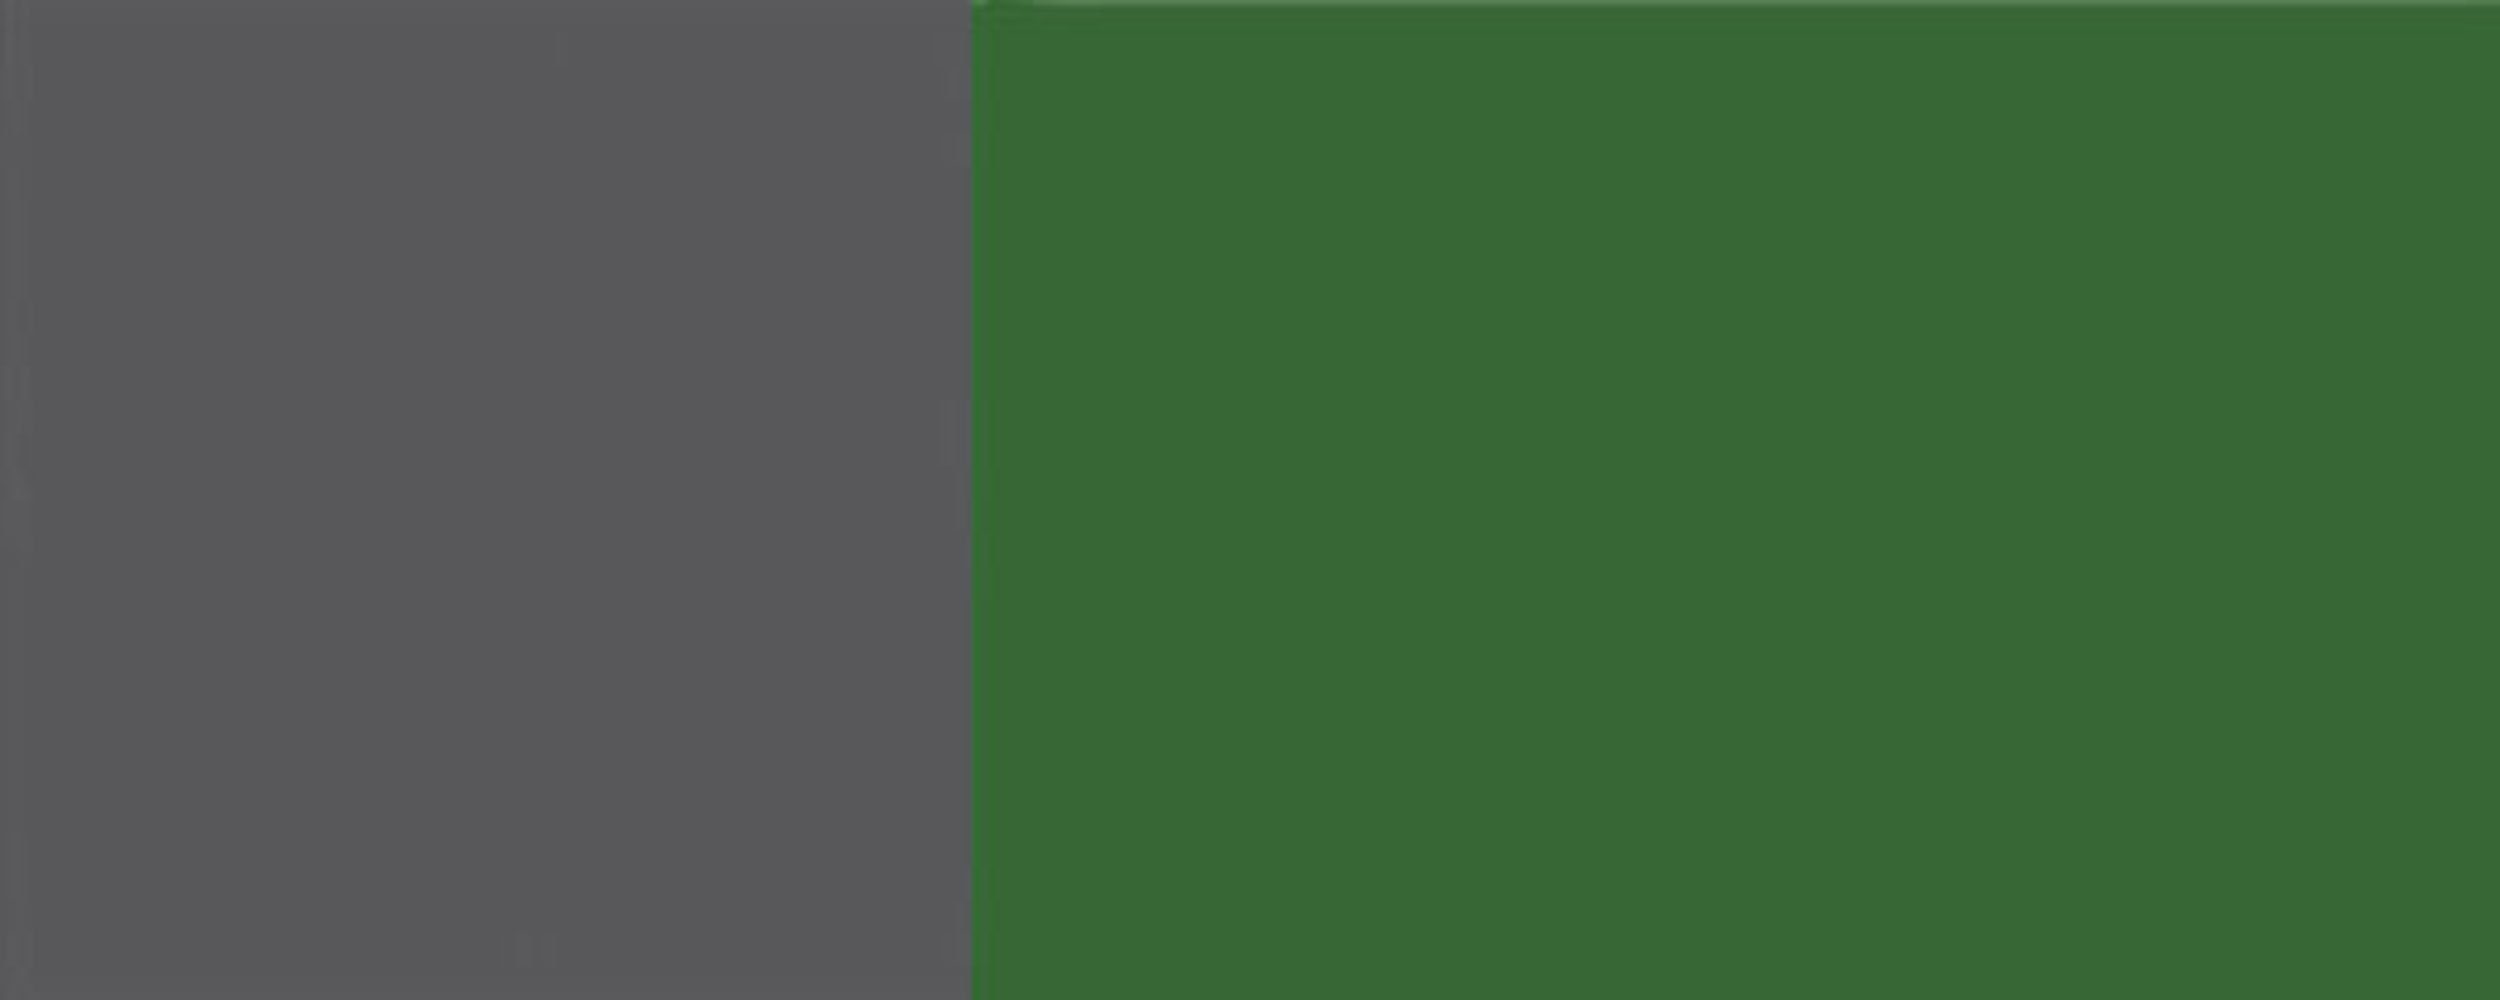 Florence Feldmann-Wohnen Ausführung Klapphängeschrank Front-, smaragdgrün Korpusfarbe und Hochglanz 1-türig (Florence) RAL 6001 50cm wählbar grifflos